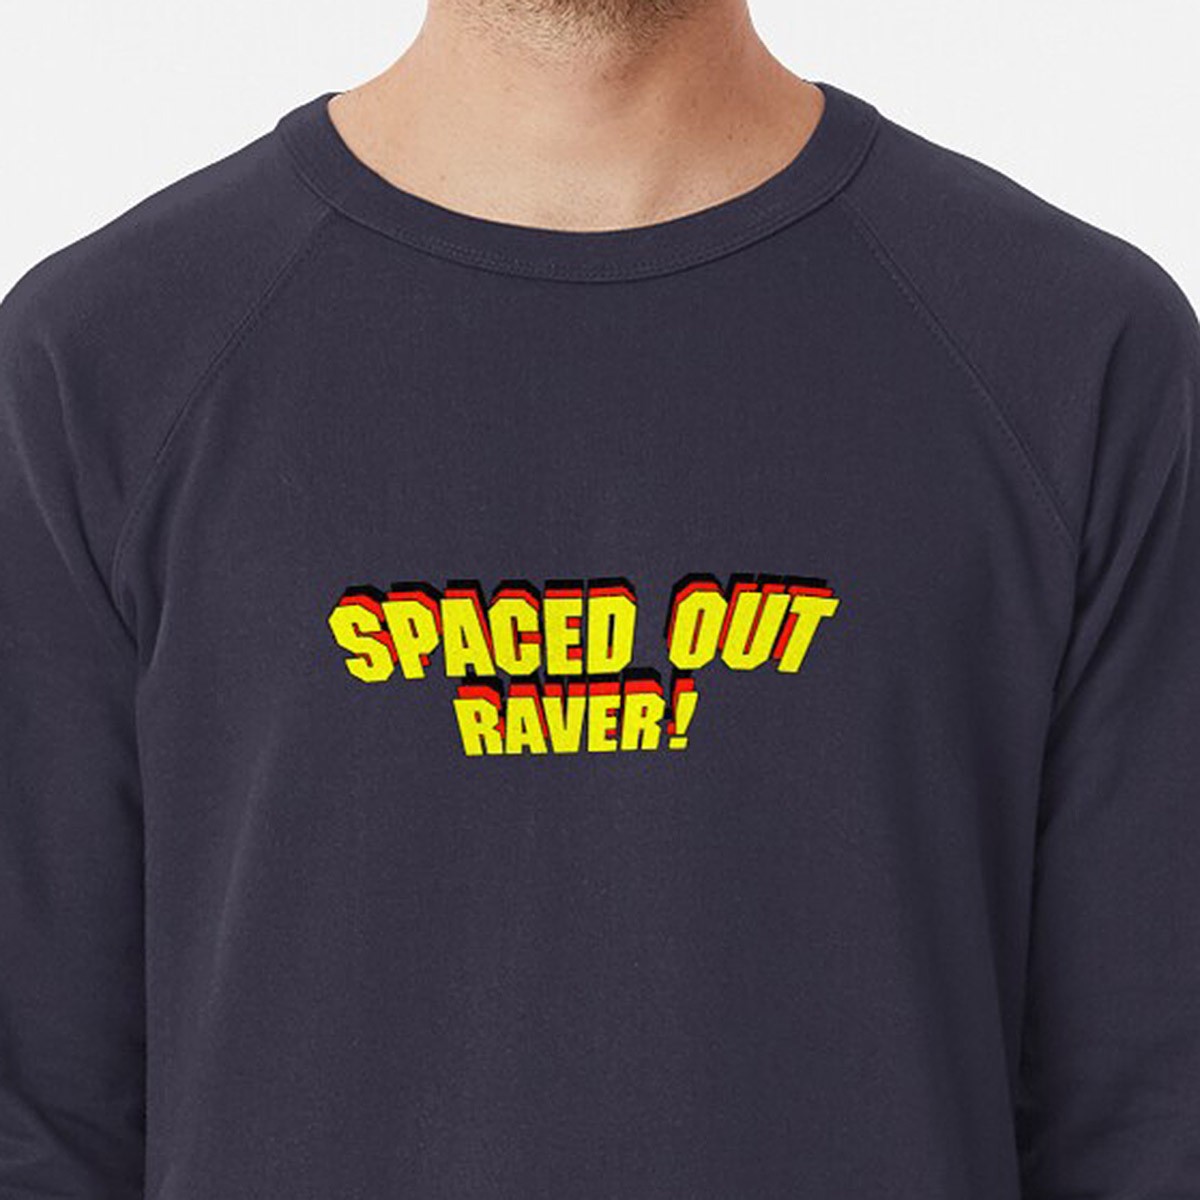 Spaced Out Raver!  - Lightweight Sweatshirt - 